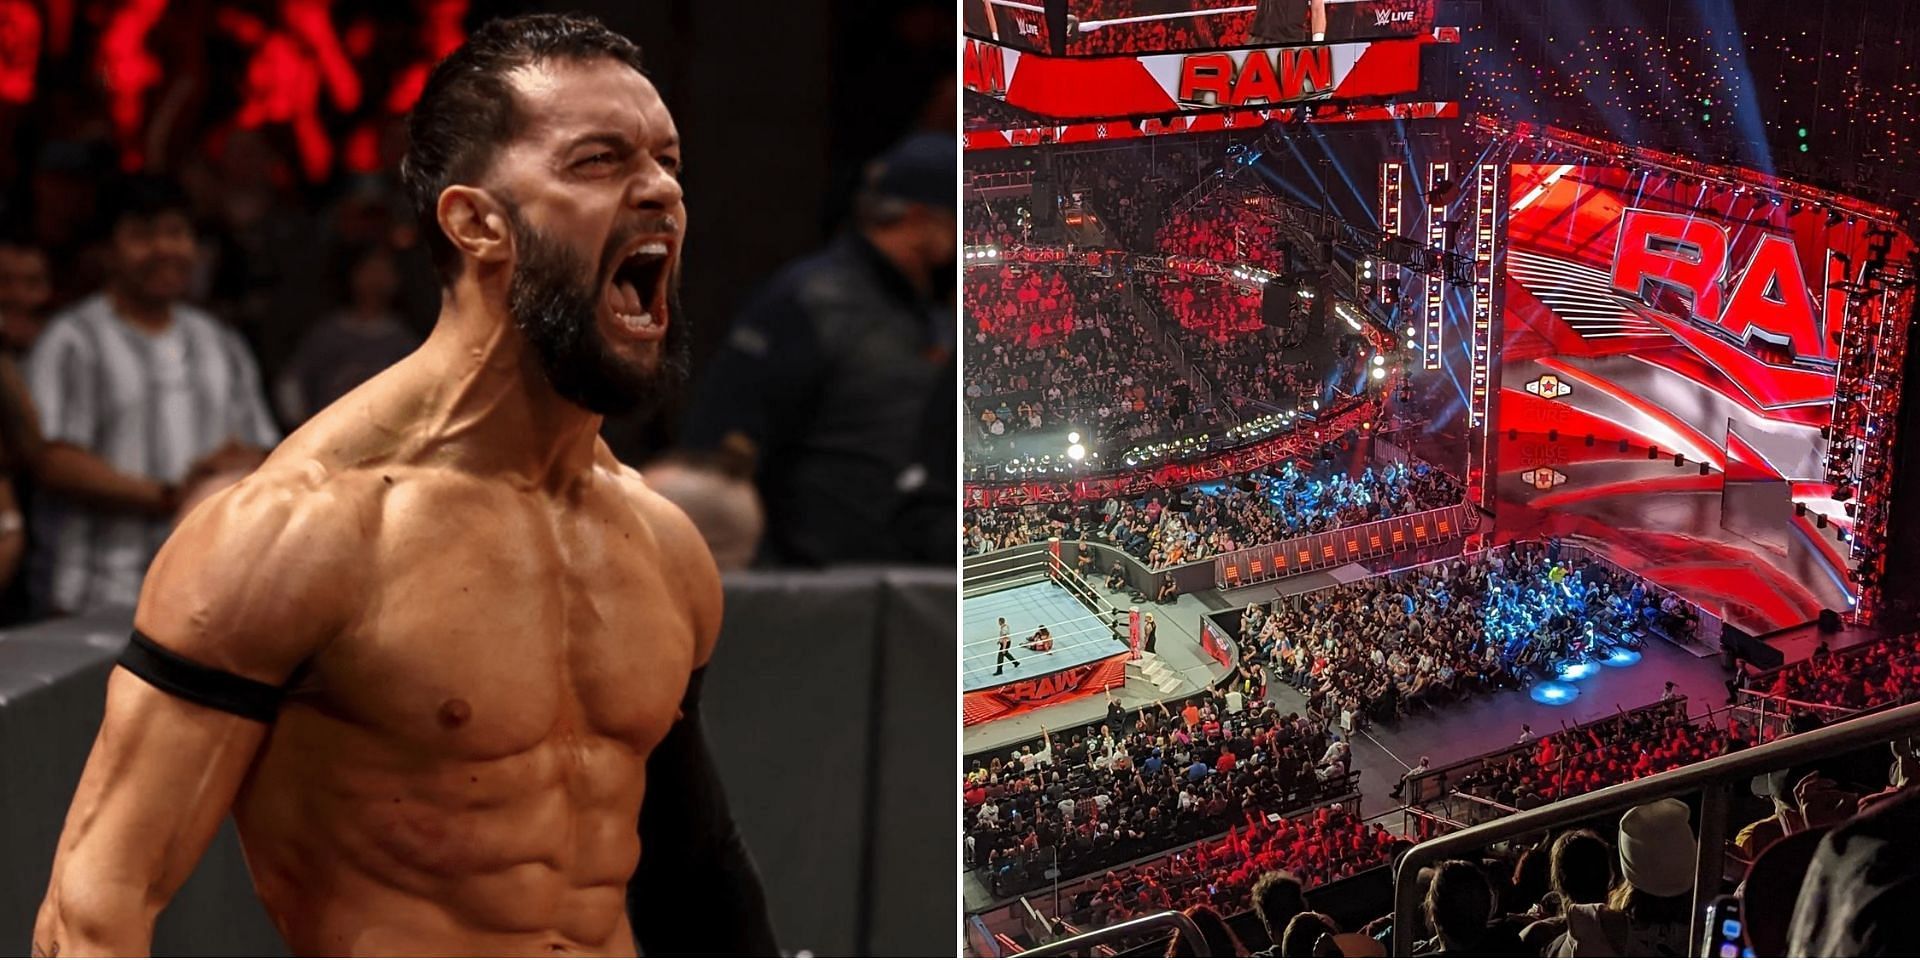 Finn Balor emerged victorious on WWE RAW